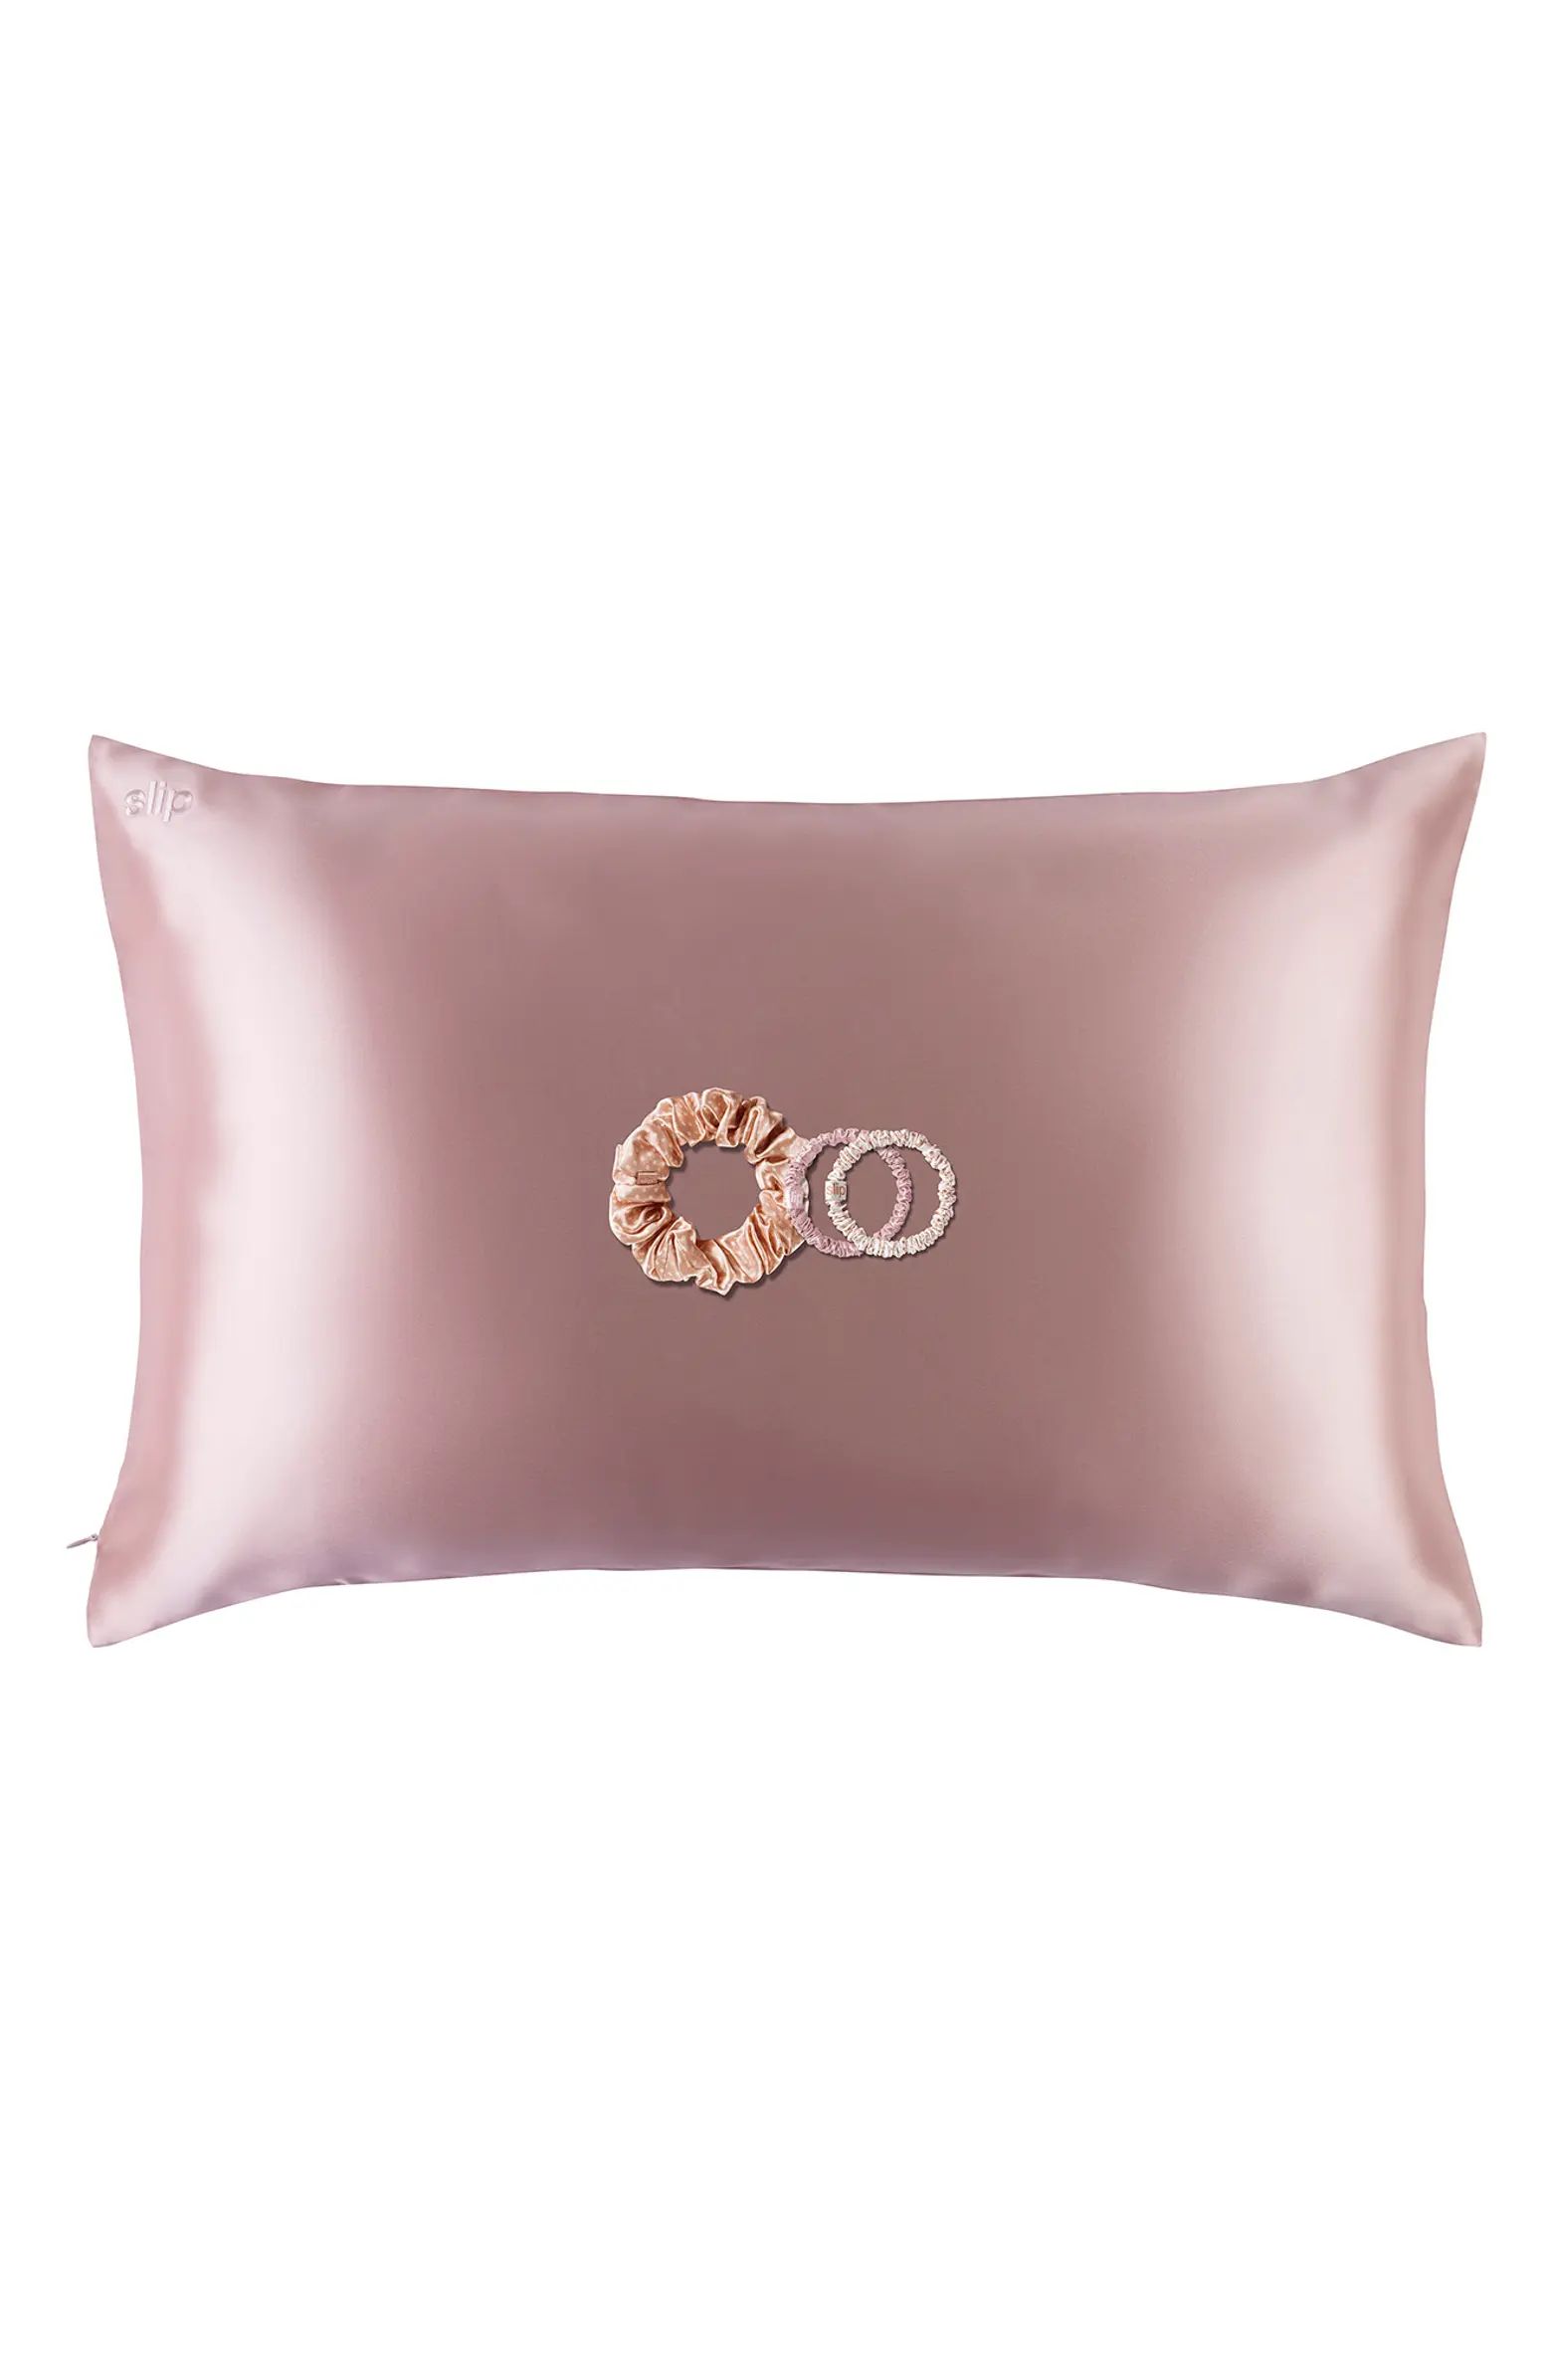 Pillowcase & Scrunchie Set (Nordstrom Exclusive) USD $115 Value | Nordstrom